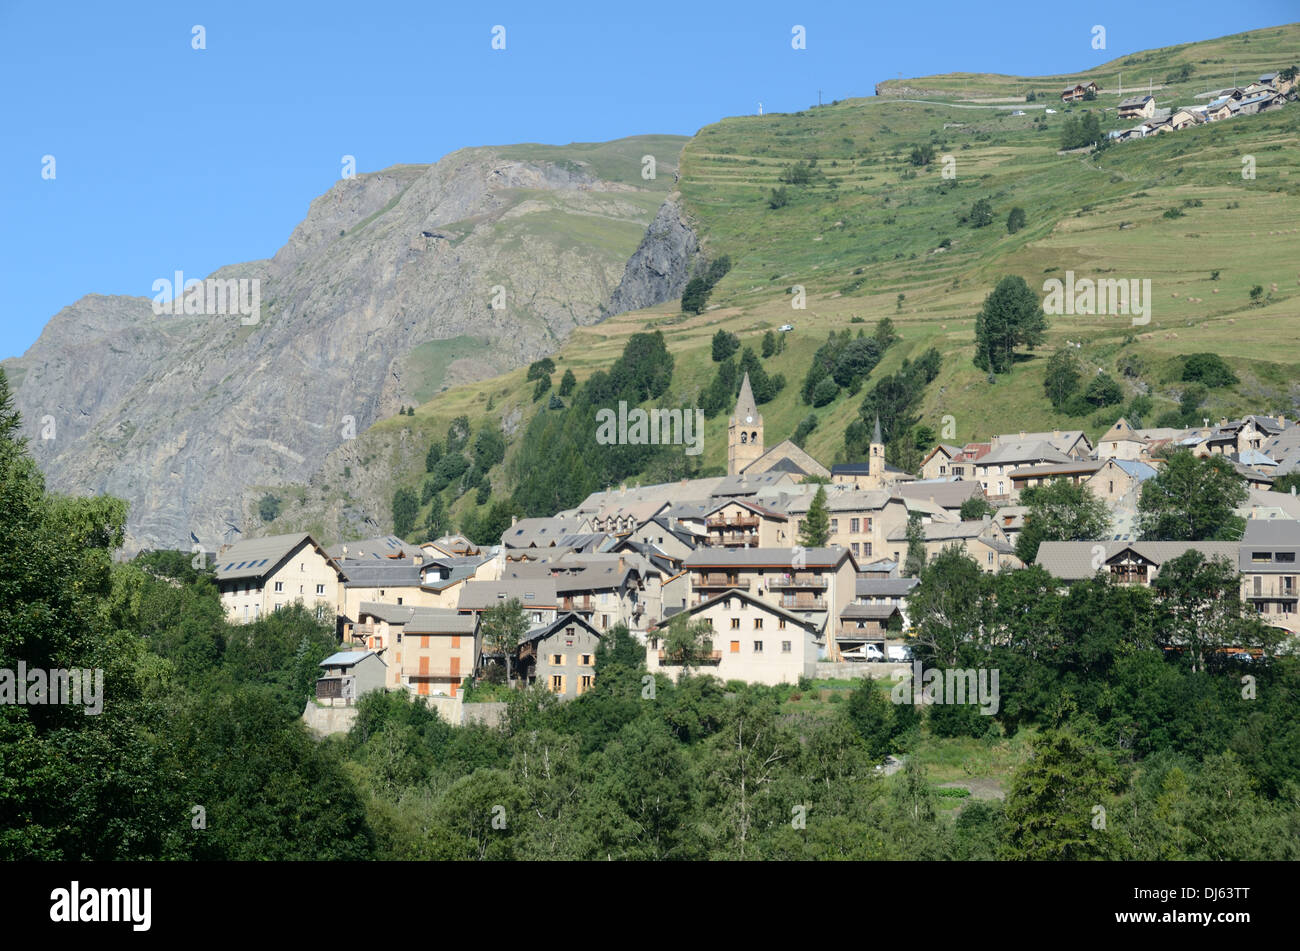 Vista Sobre La Grave Alpine Village En El Valle Del Romanche Altos Alpes Franceses Alpes Francia Foto de stock